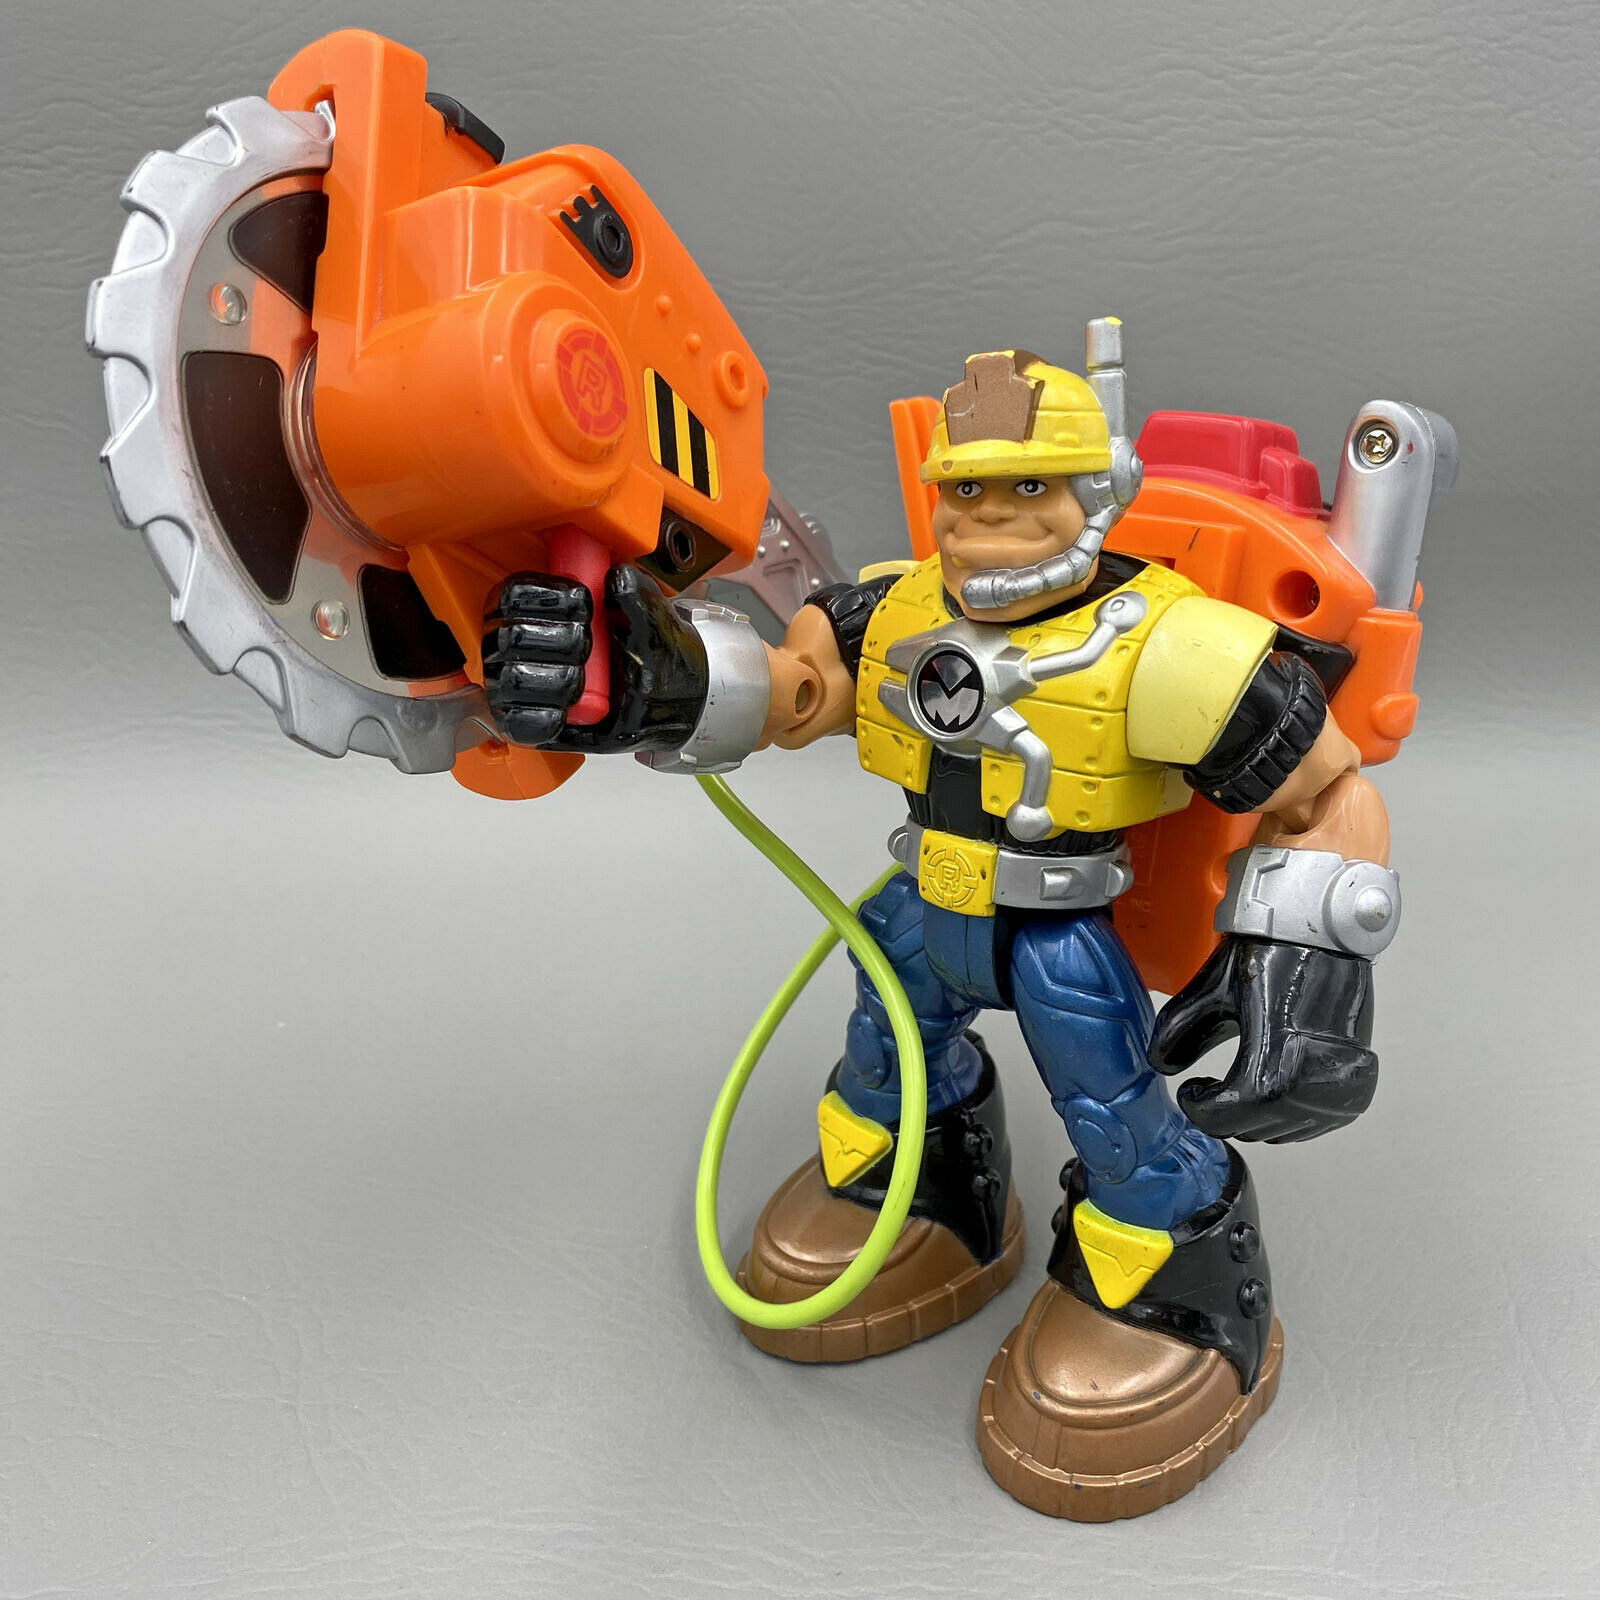 Rescue Heroes Construction Worker Powermax Jack Hammer W/ Motorized Saw